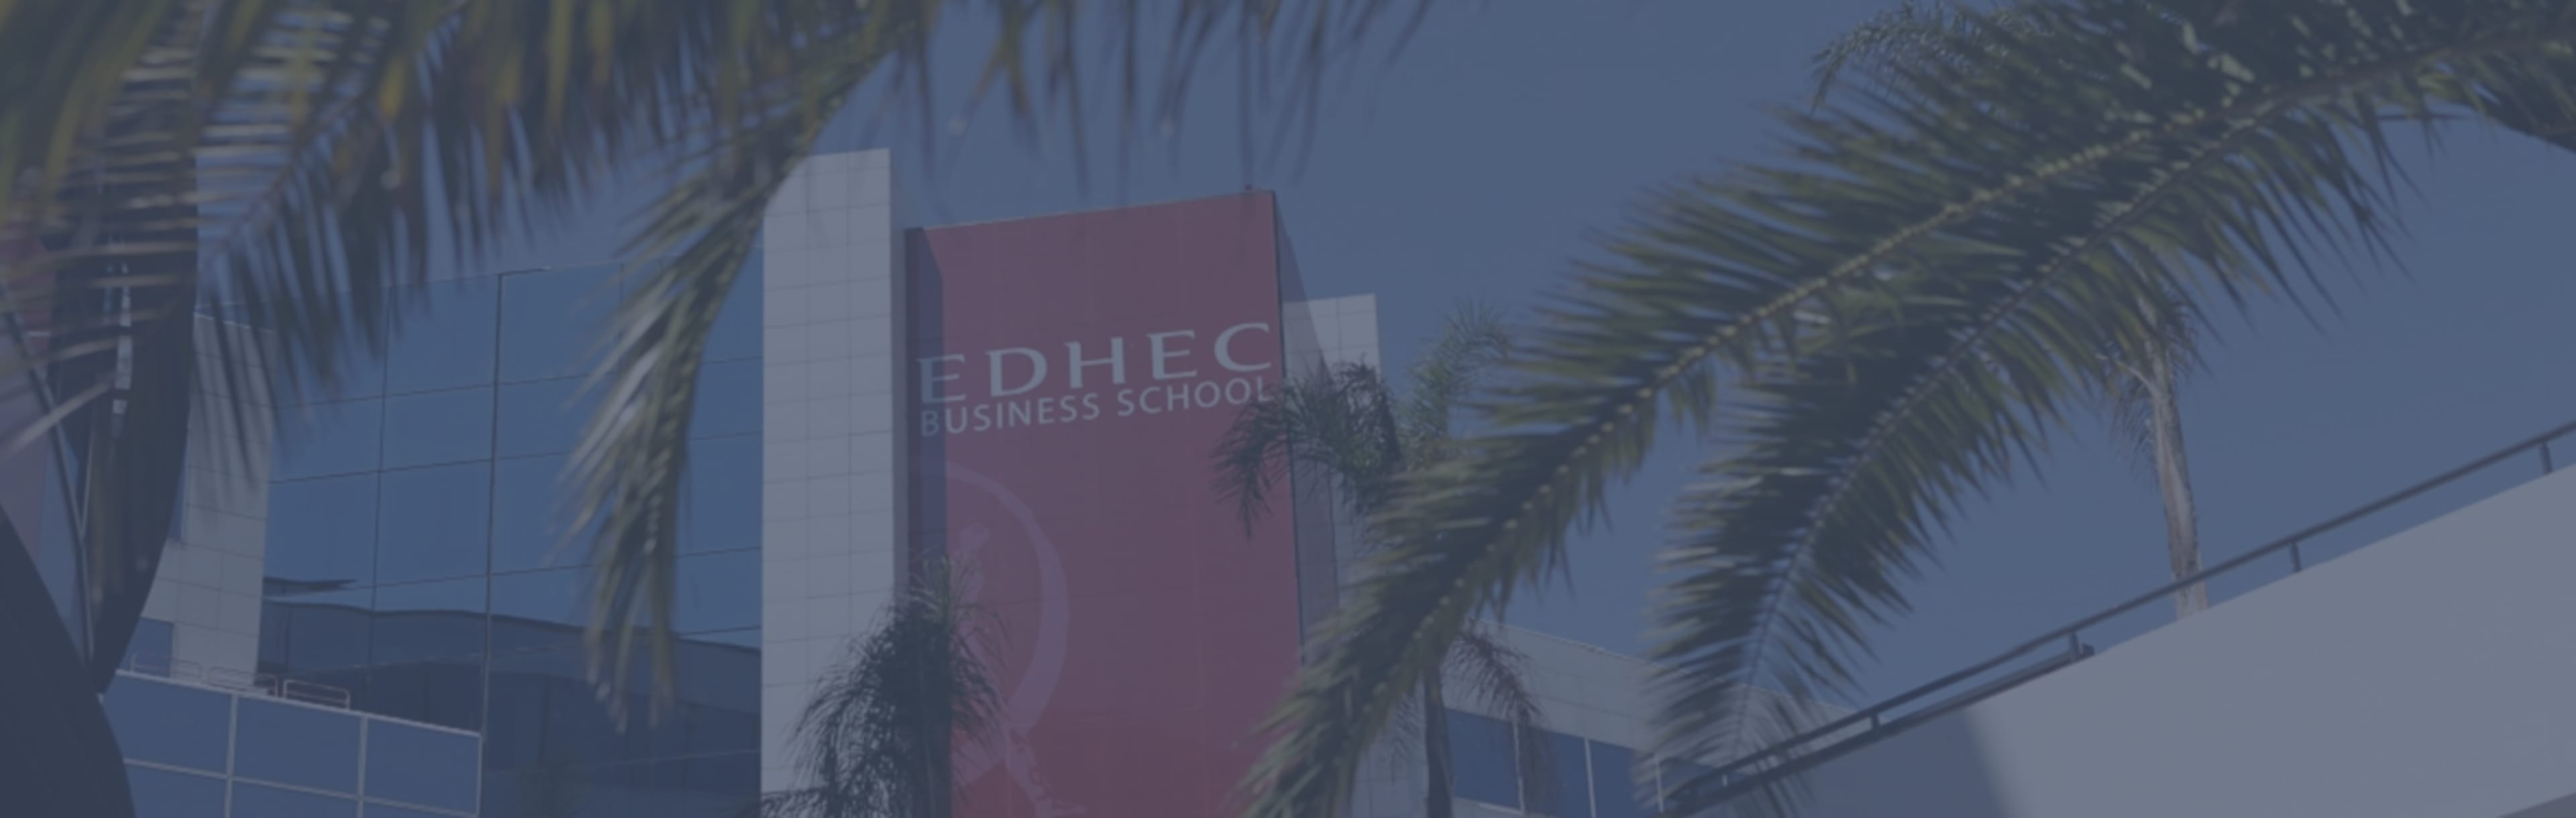 EDHEC Business School - MBAs Executive MBA